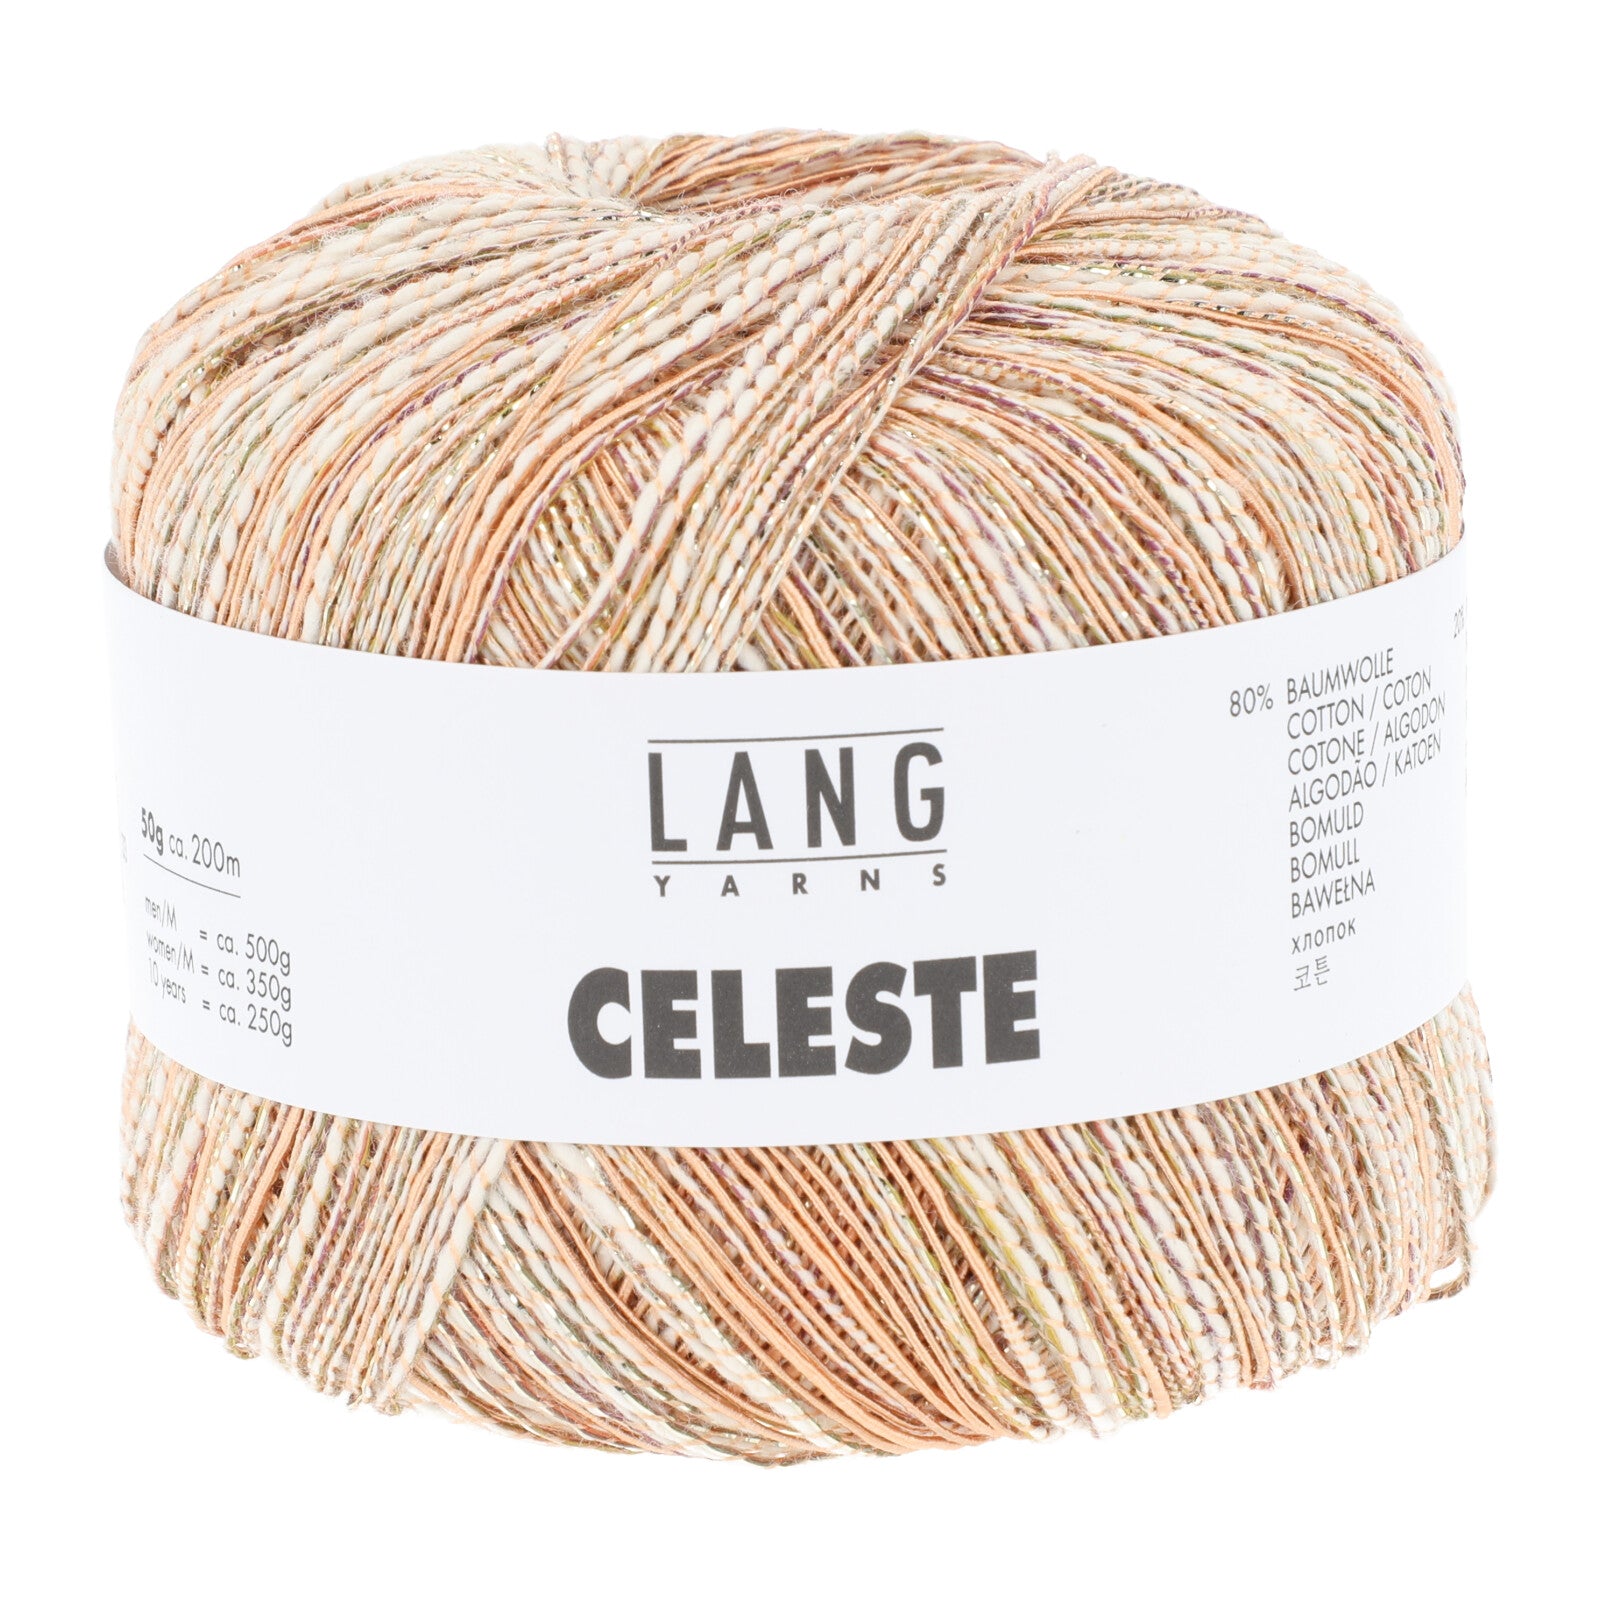 Lang Yarns Celeste yarn color 27